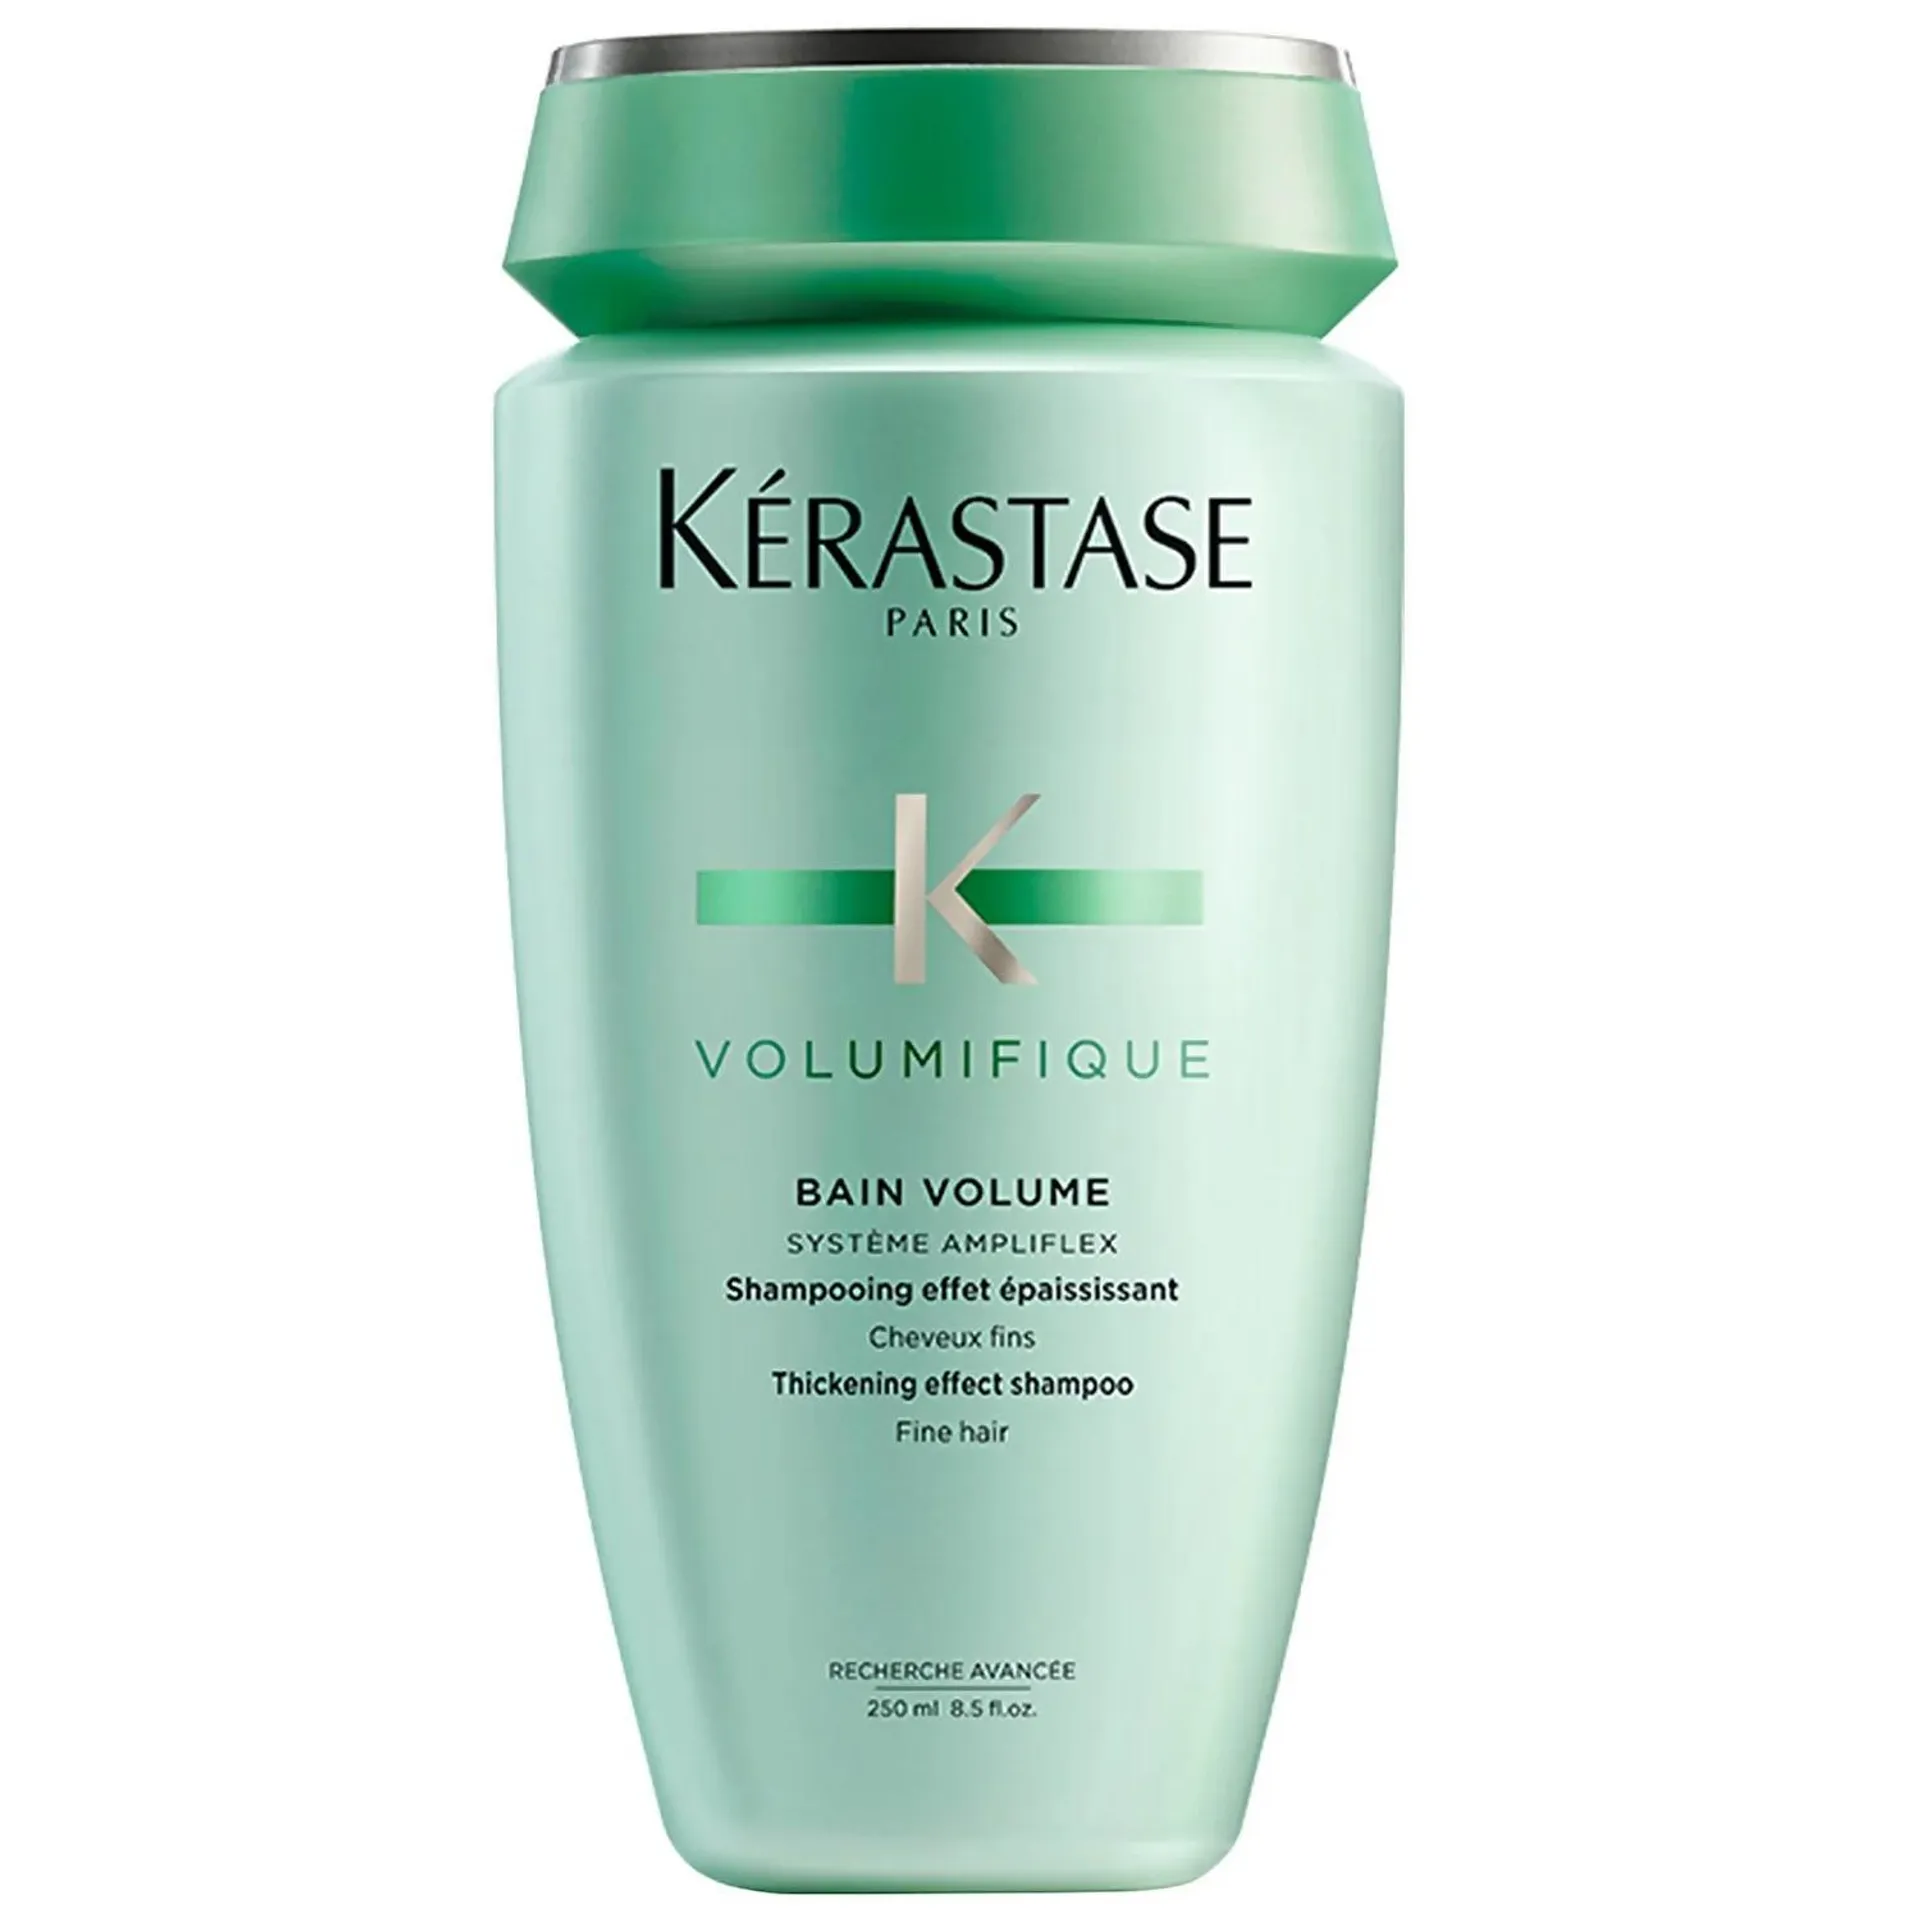 Kérastase Volumifique Bain Volume: Thickening Effect Shampoo for Fine Hair 250ml